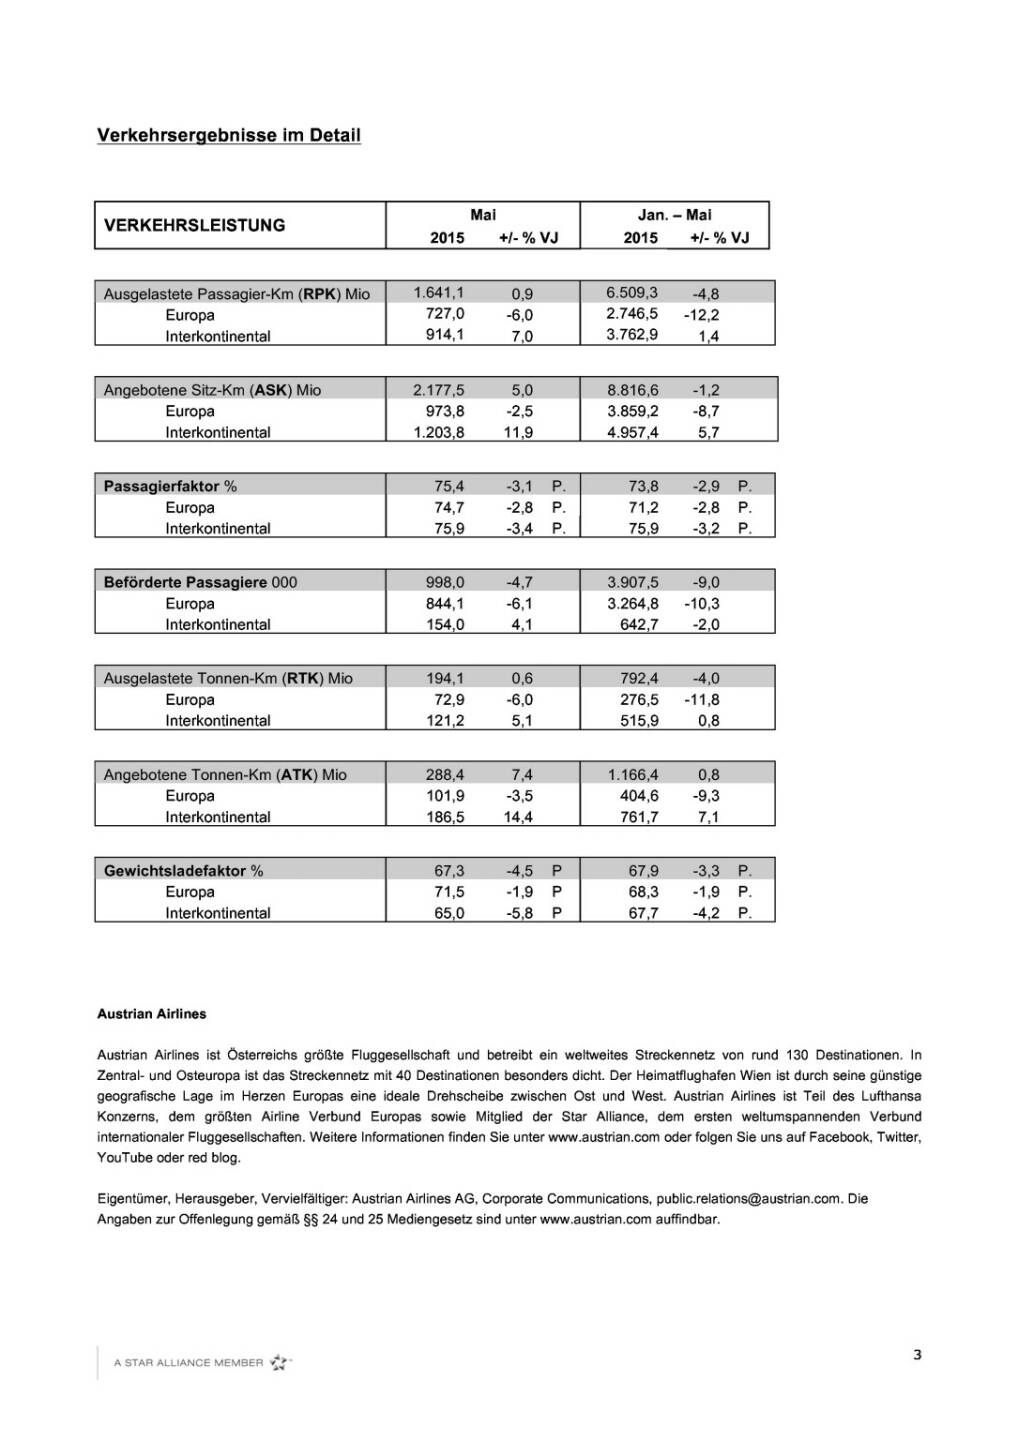 AUA mit Passagierplus von 6,6 Prozent im Mai, Seite 3/3, komplettes Dokument unter http://boerse-social.com/static/uploads/file_112_aua_passagiere.pdf